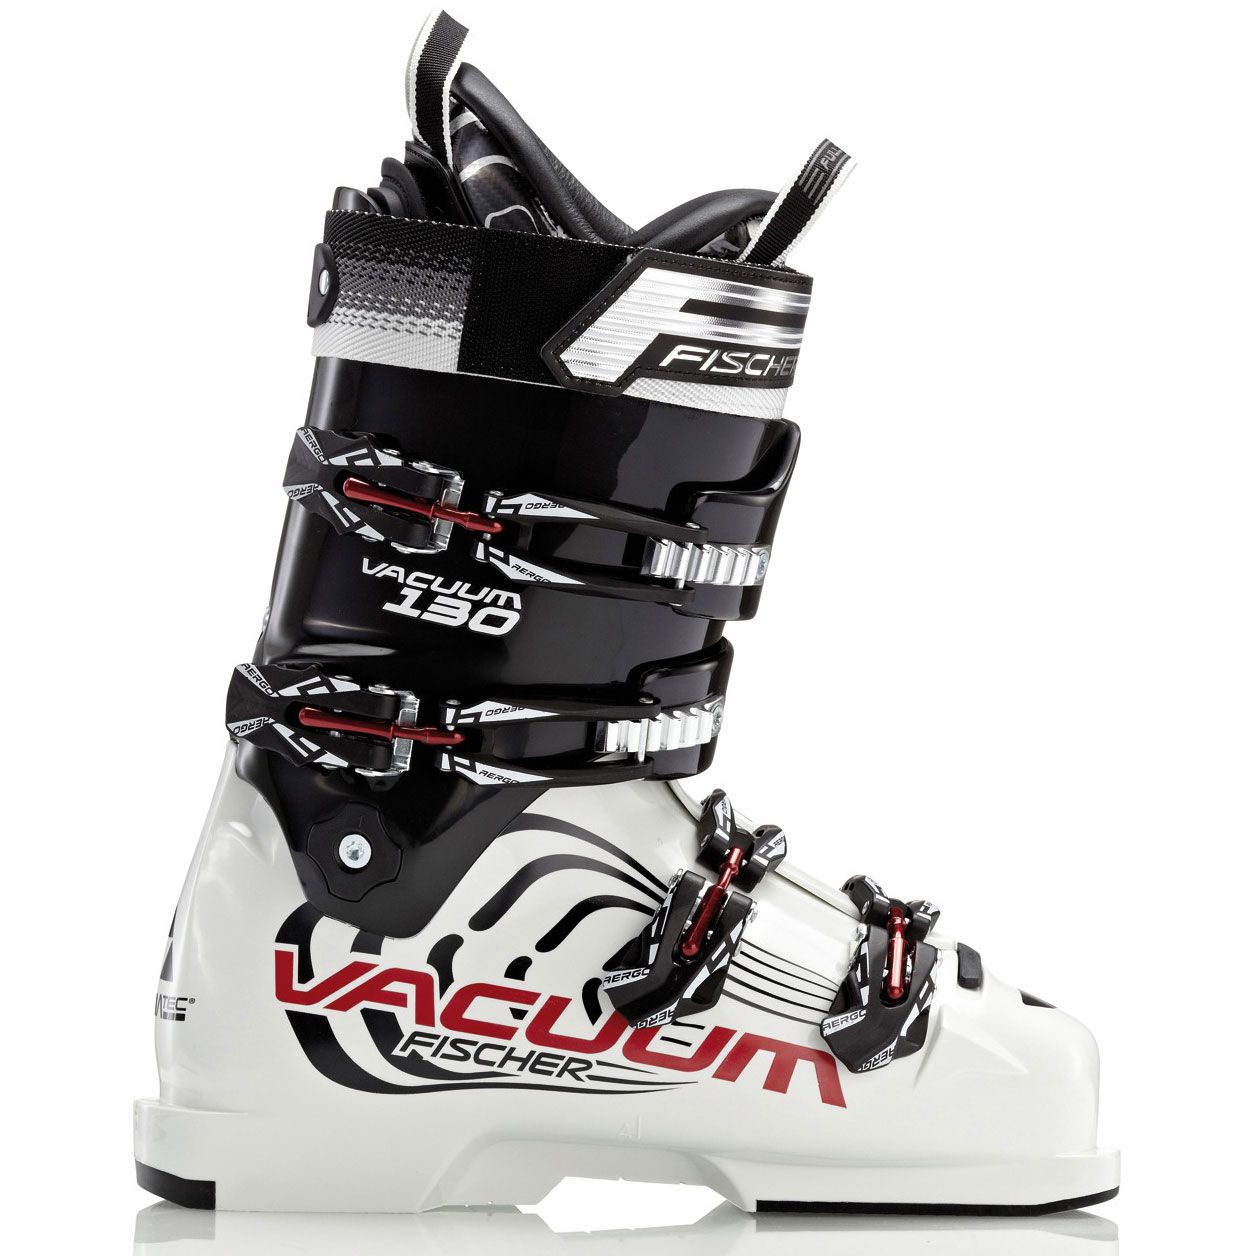 Chaussures ski Soma Vacuum 130 - Pointure 26.5 Mondopoint - Fr 41